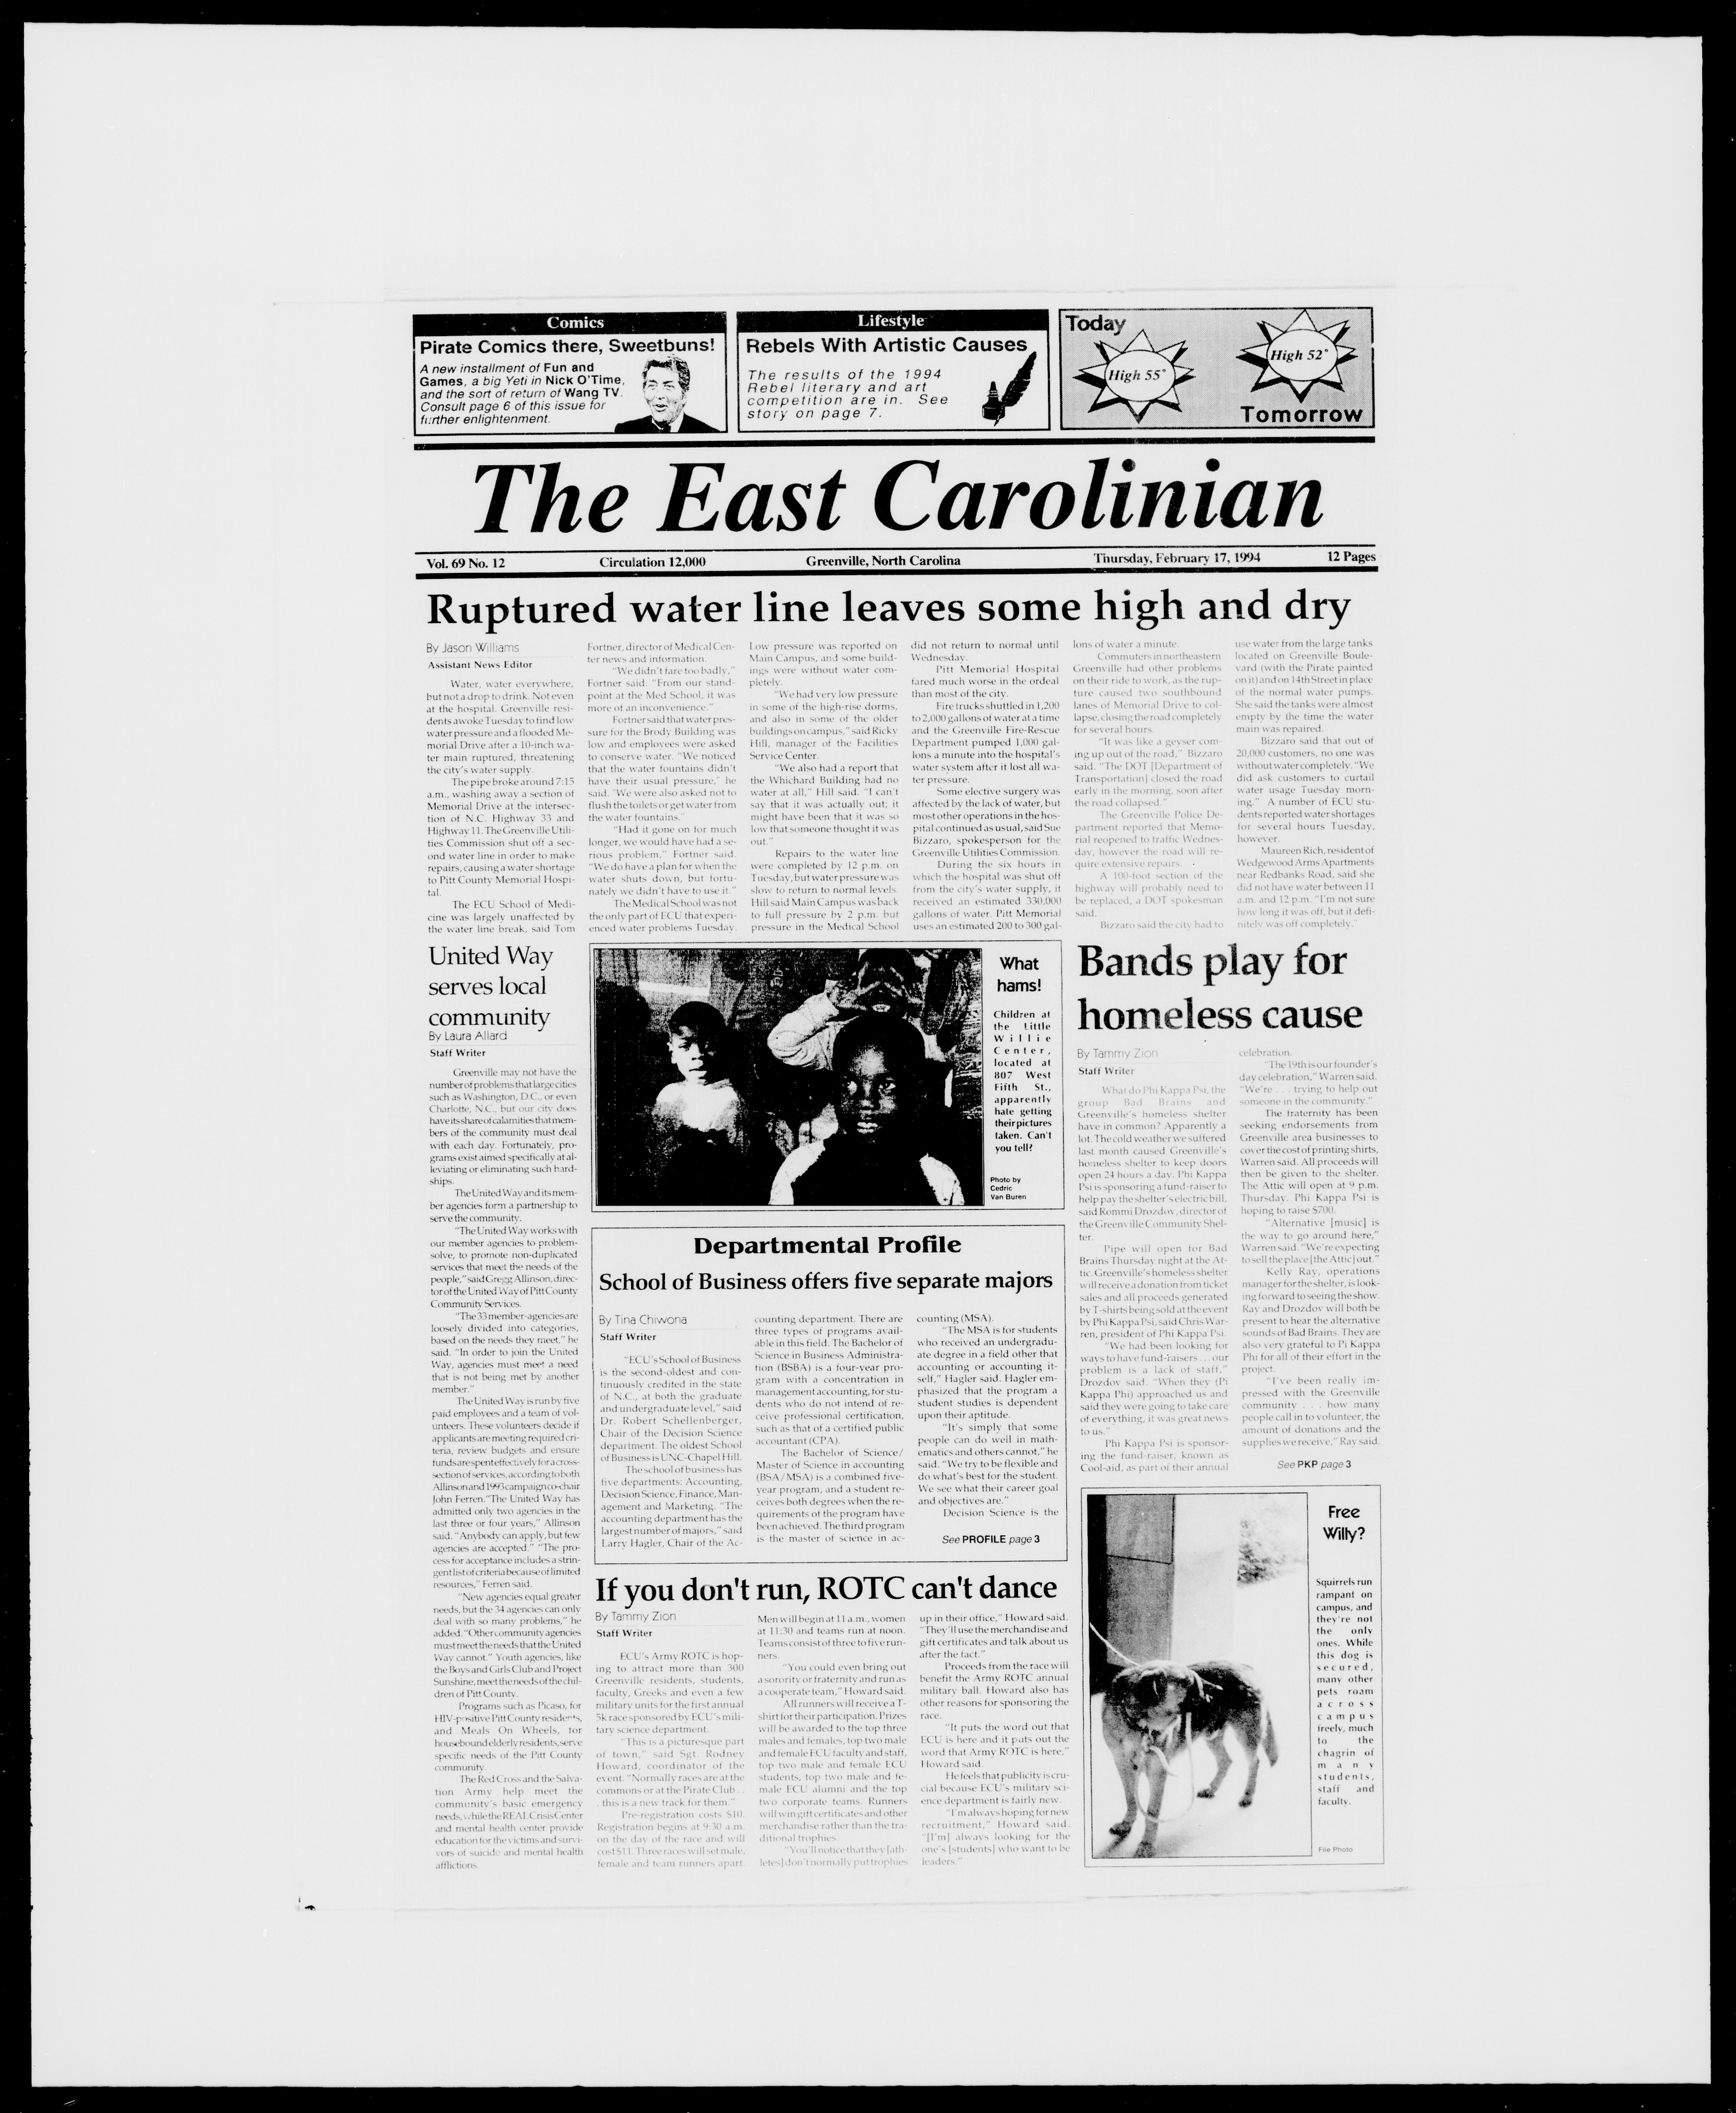 The East Carolinian, February 17, 1994 photo